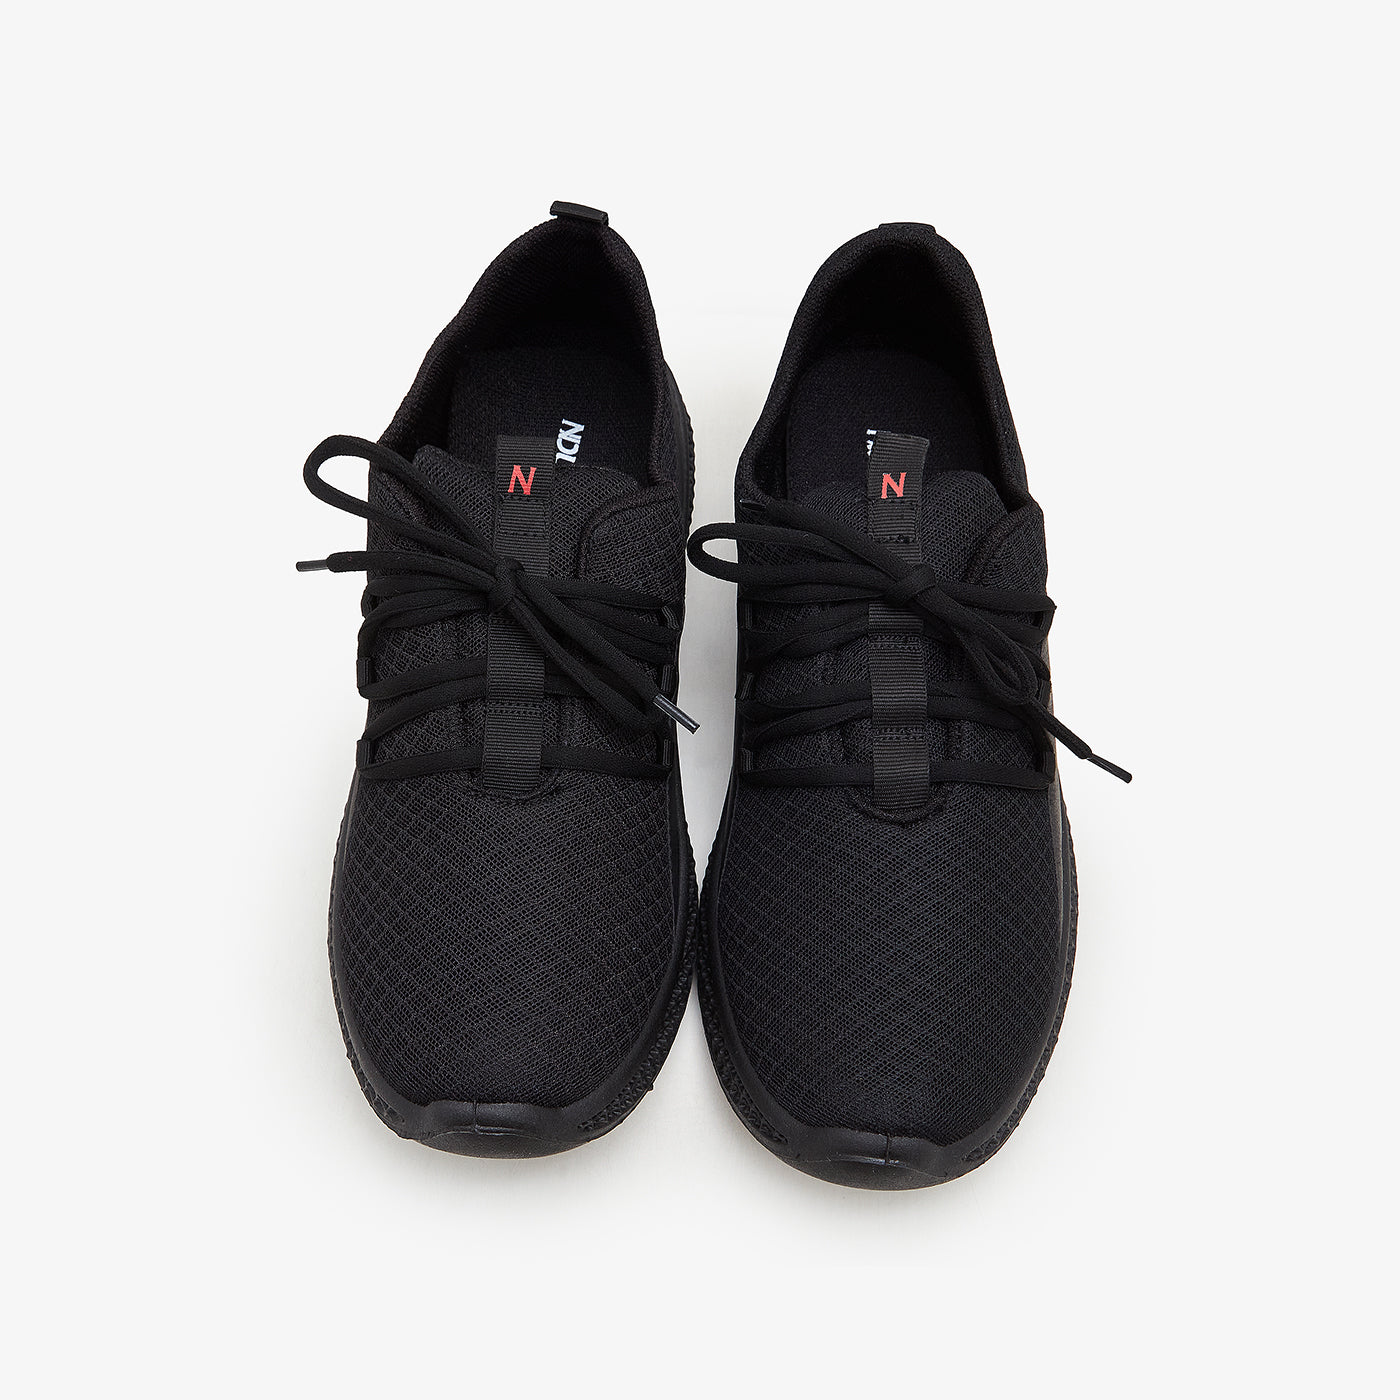 Buy Men Sneakers & Sports Shoes - Men's Comfy Running Shoes M-PR-TYL ...